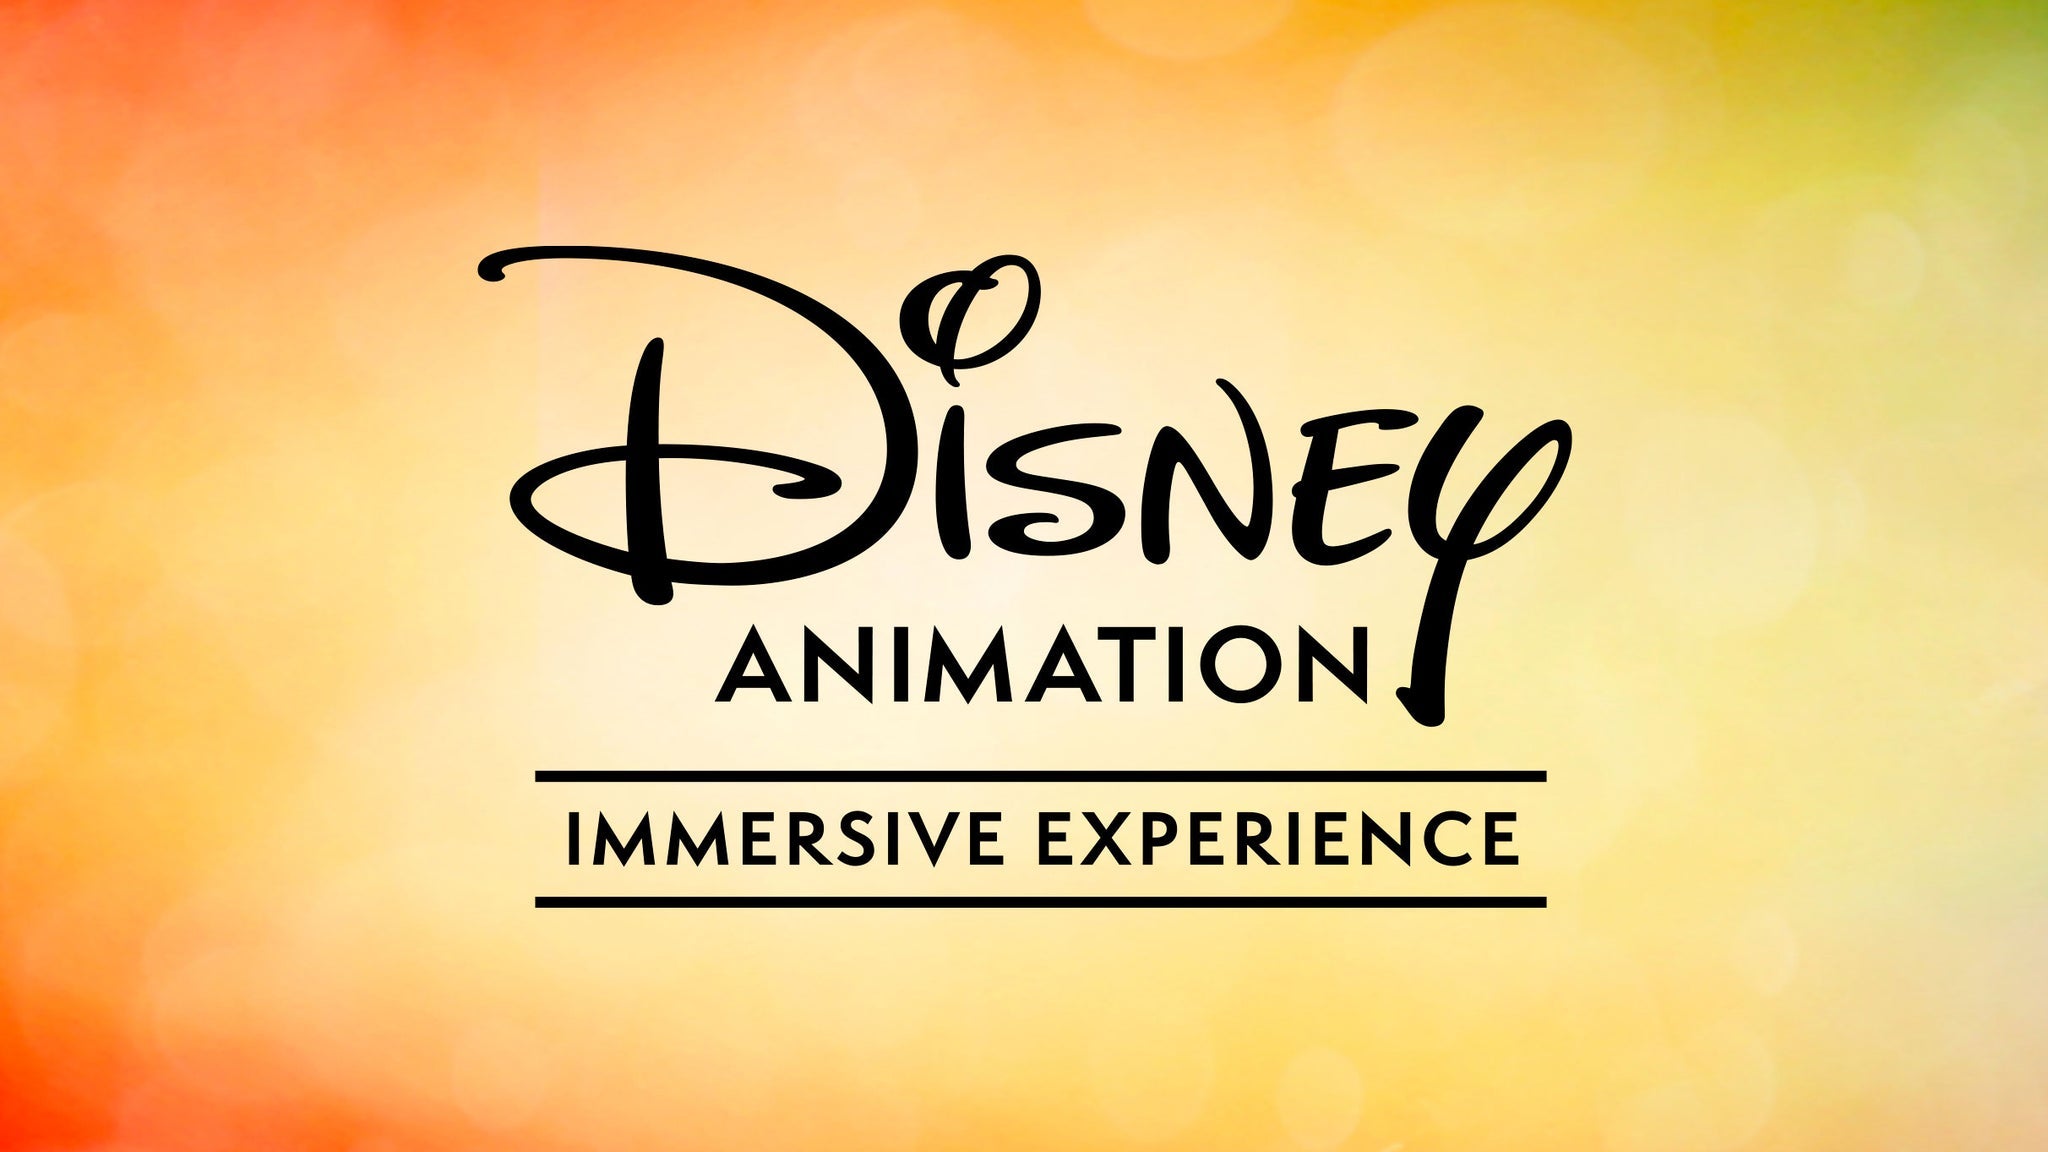 Dallas - Disney Animation: Immersive Experience